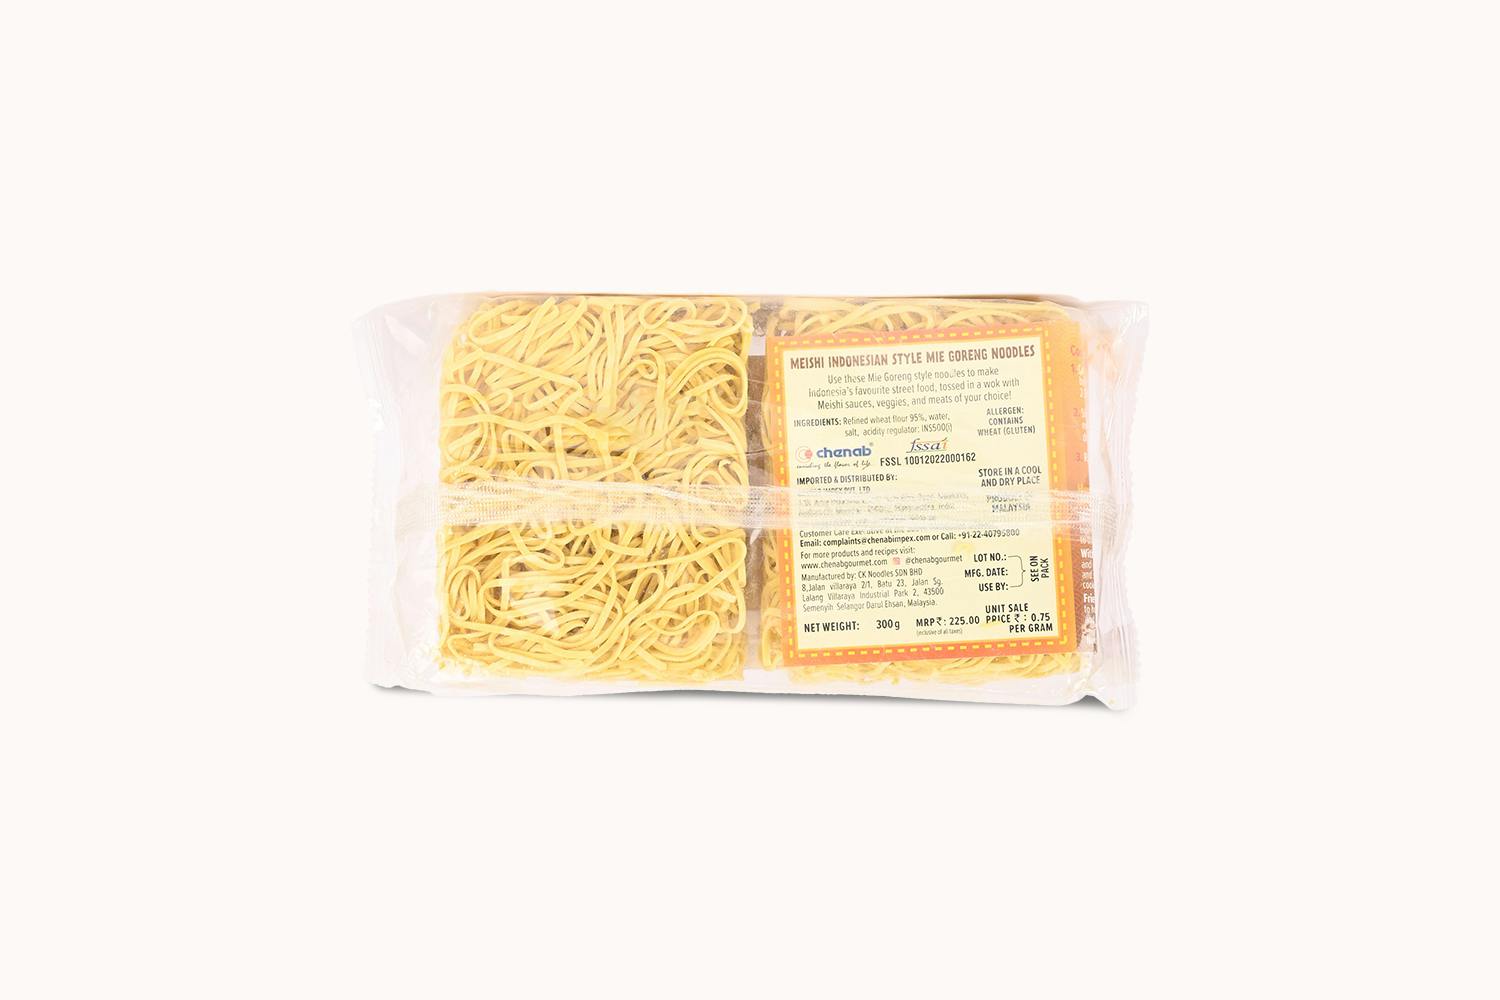 /m/e/meishi-indonesian-noodles-mie-goreng-300g-2_cnihokdgpfb4wkmb.jpg